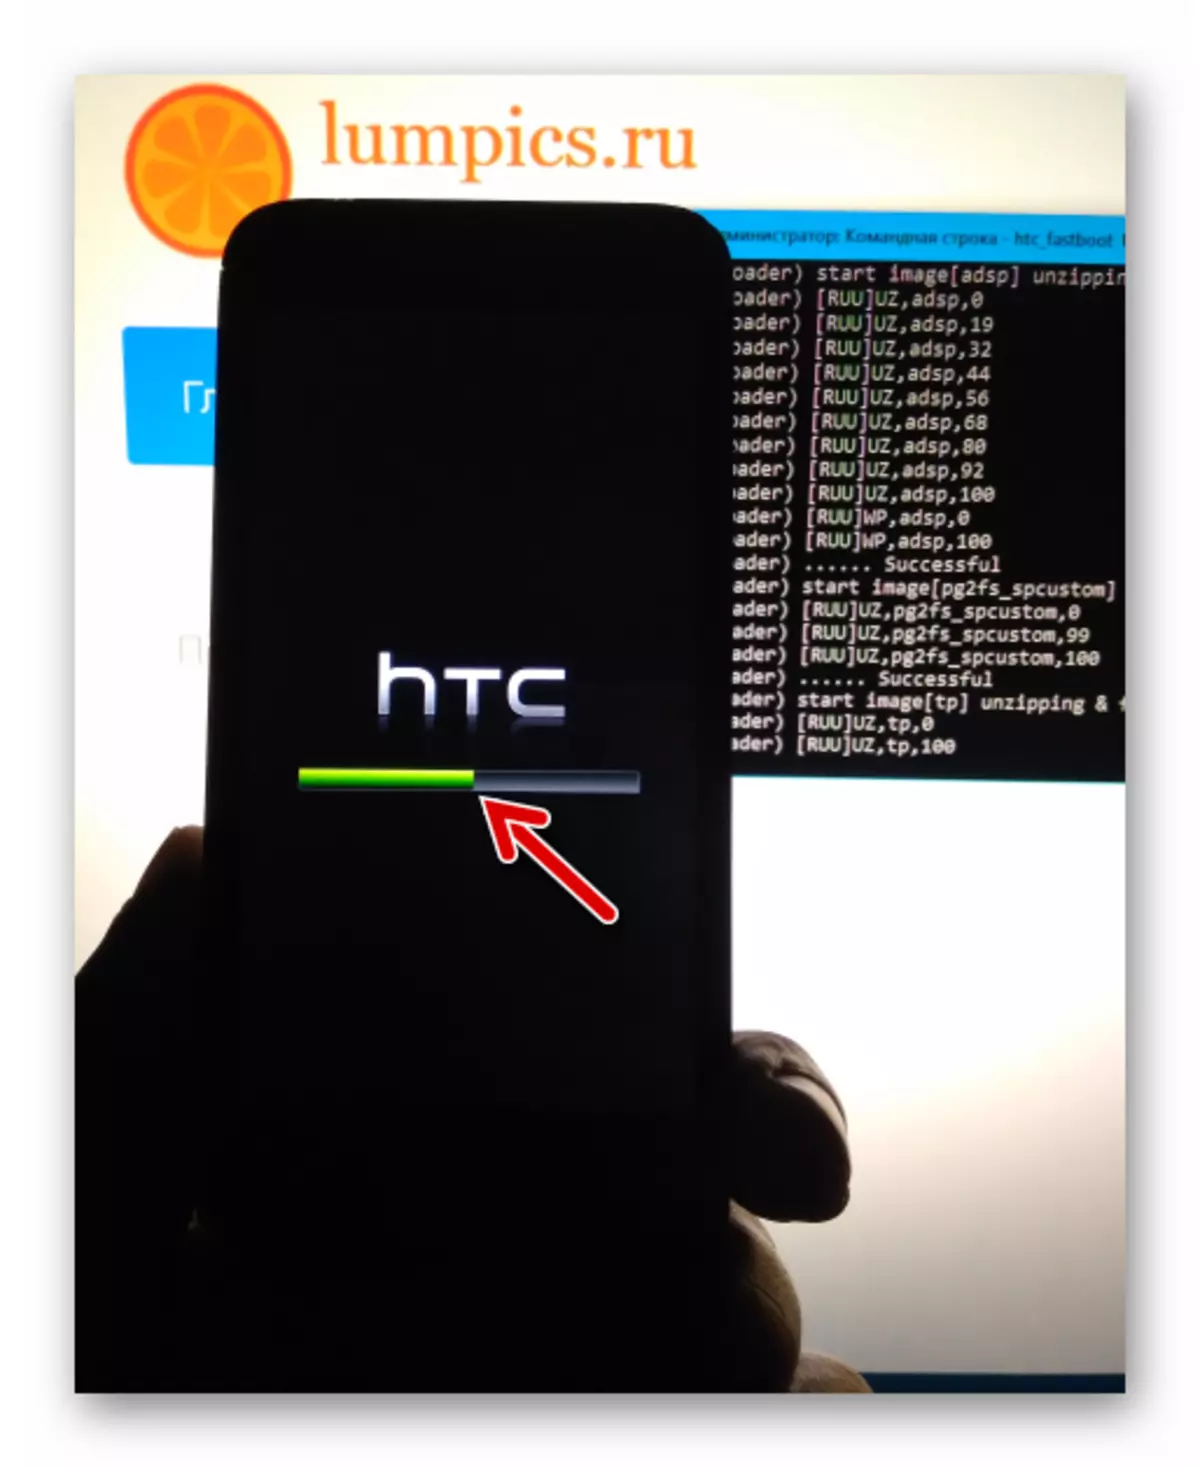 HTC fastboot வழியாக மென்பொருள் போது சாதனம் திரையில் 601 மரணதண்டனை காட்டி ஆசை